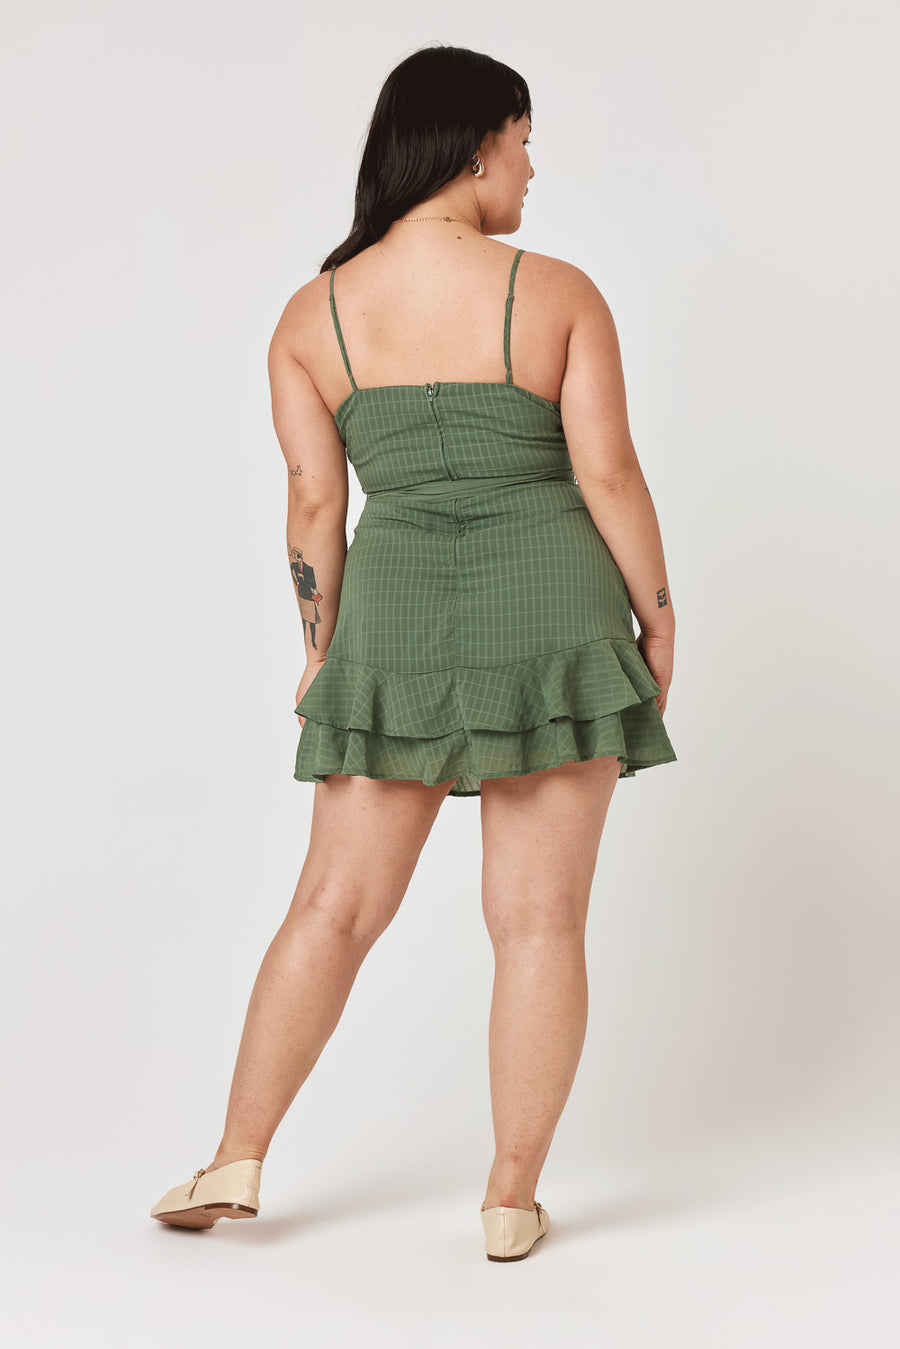 Olive Strappy Ruffle Dress - Trixxi Clothing